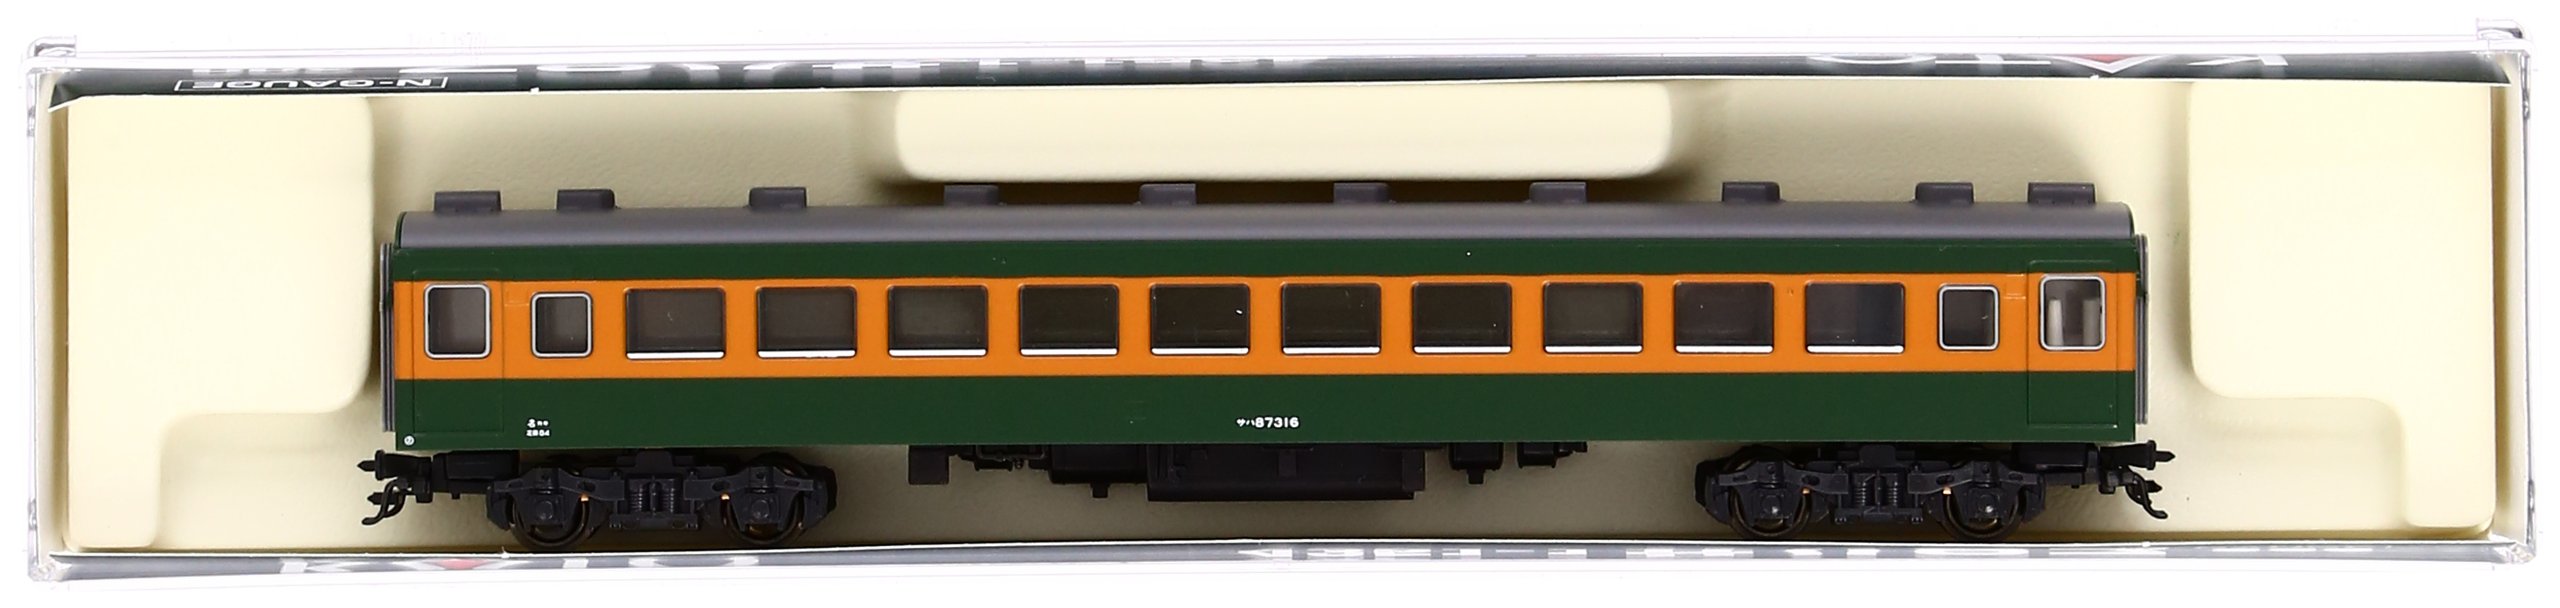 Kato N Gauge Saha87 300 Model Train - Brand New High-Quality